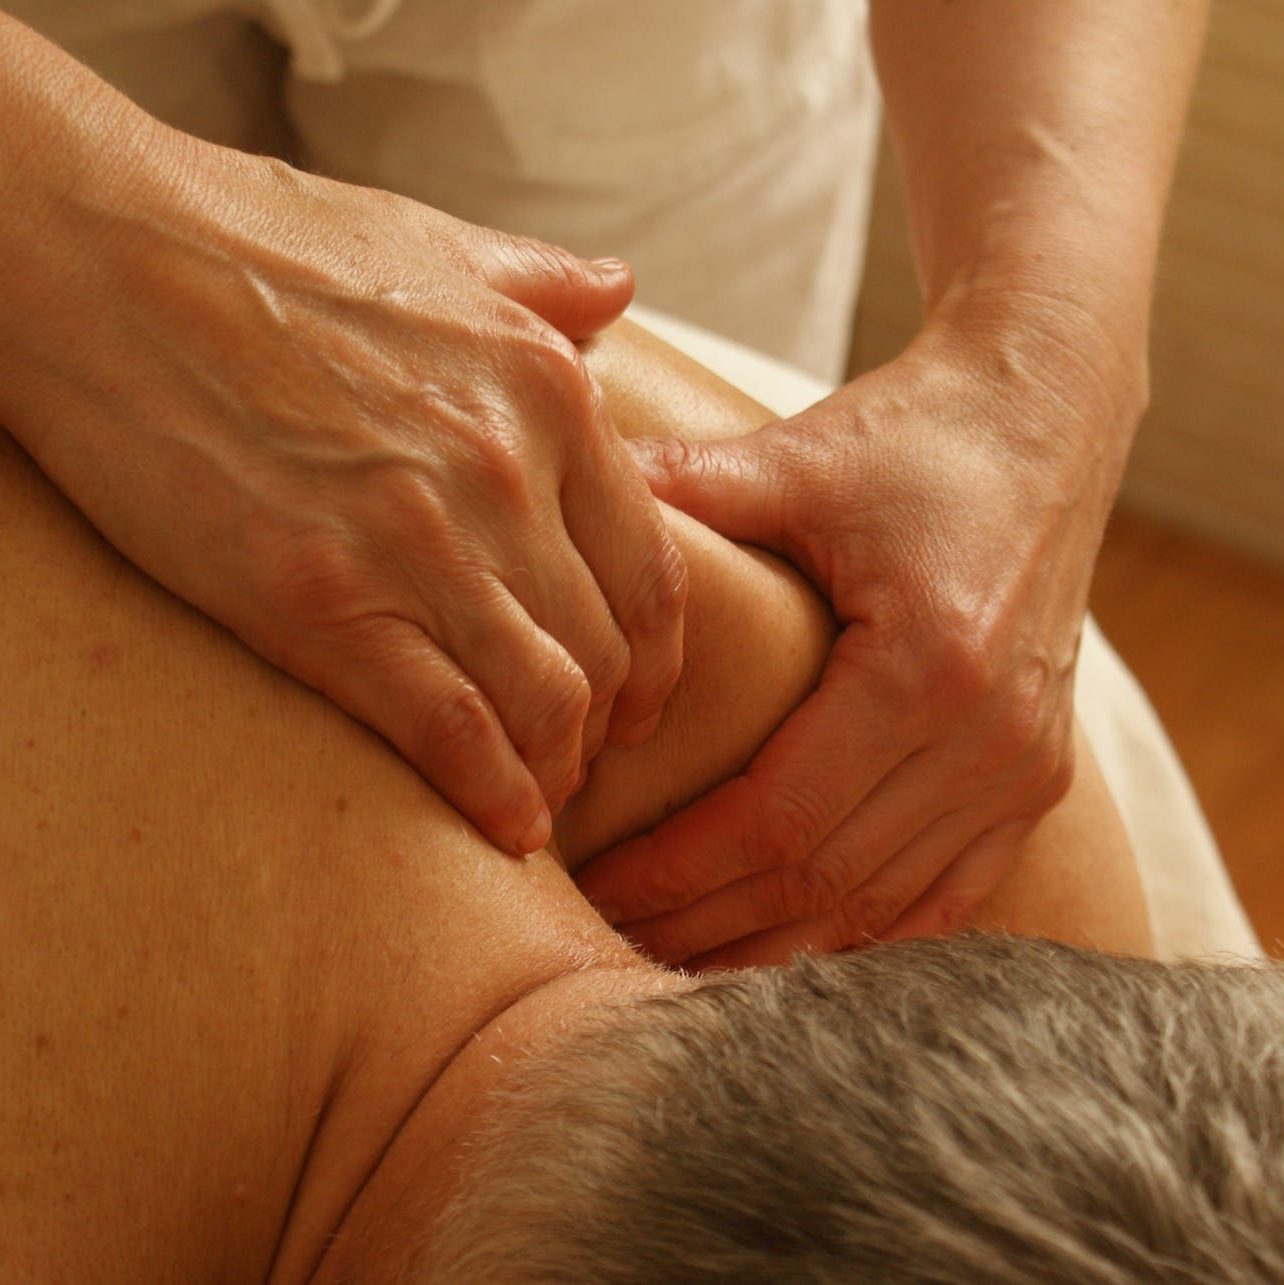 Person Massaging Man's Shoulder